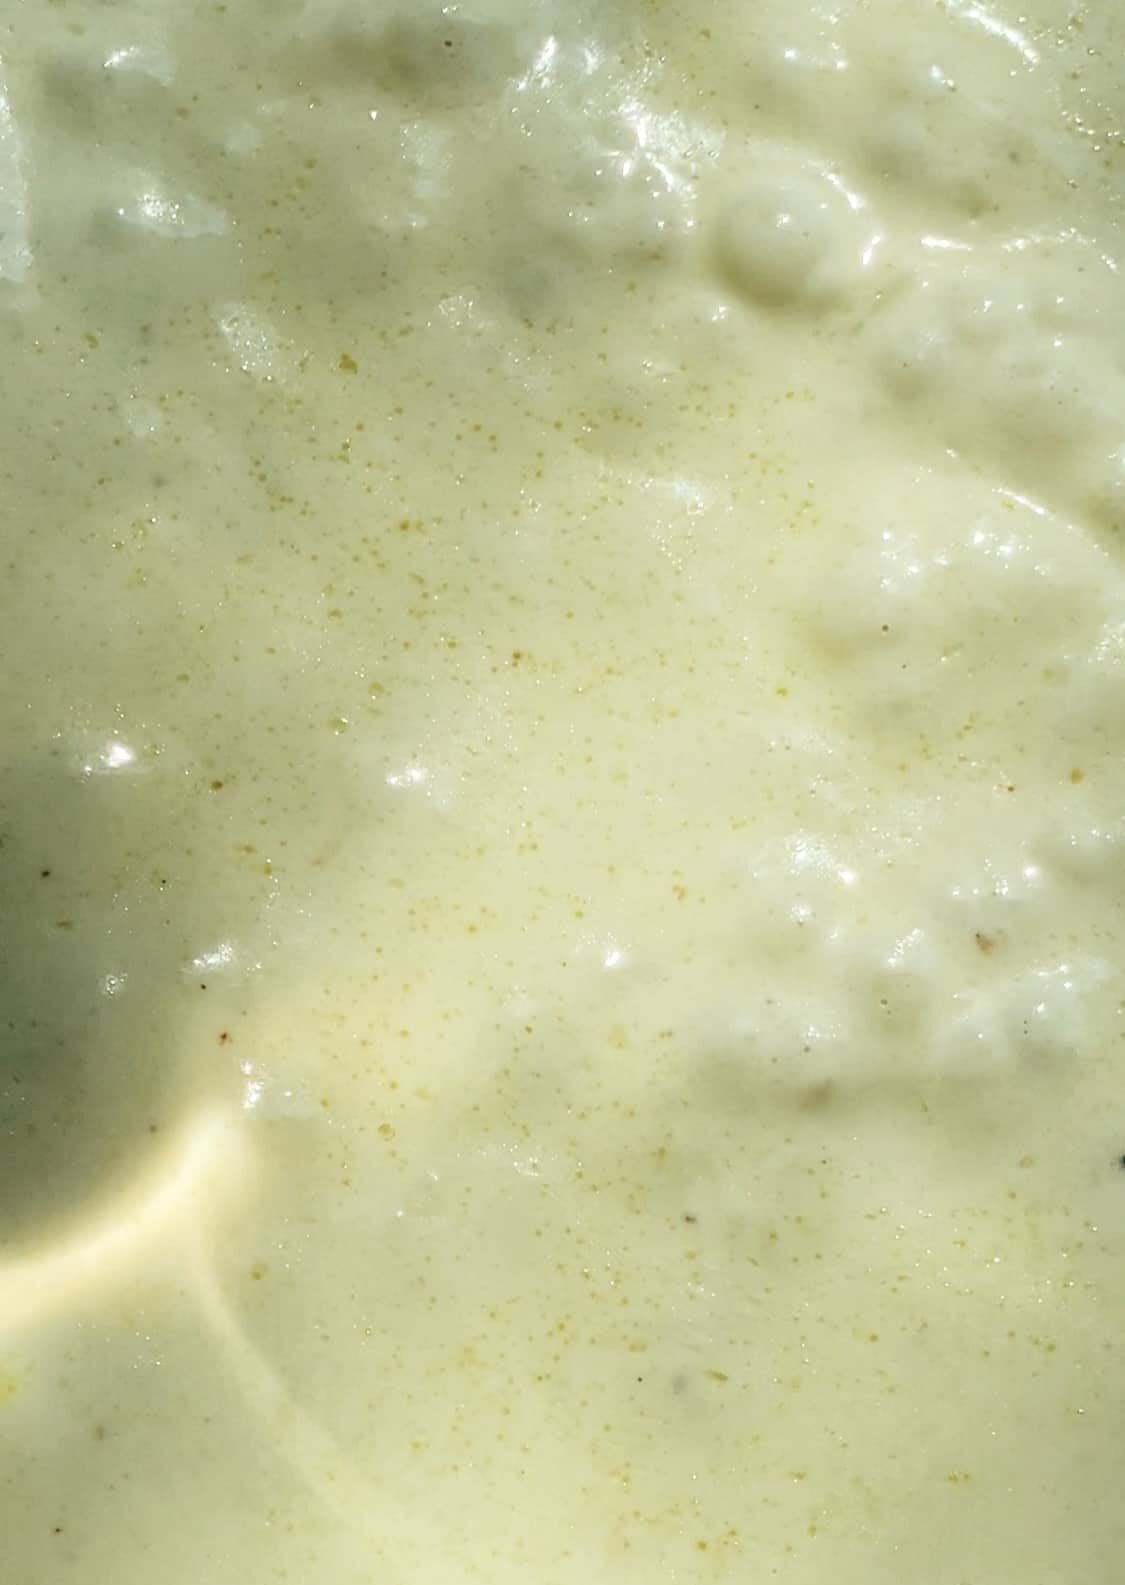 cream sauce boiling process photo.